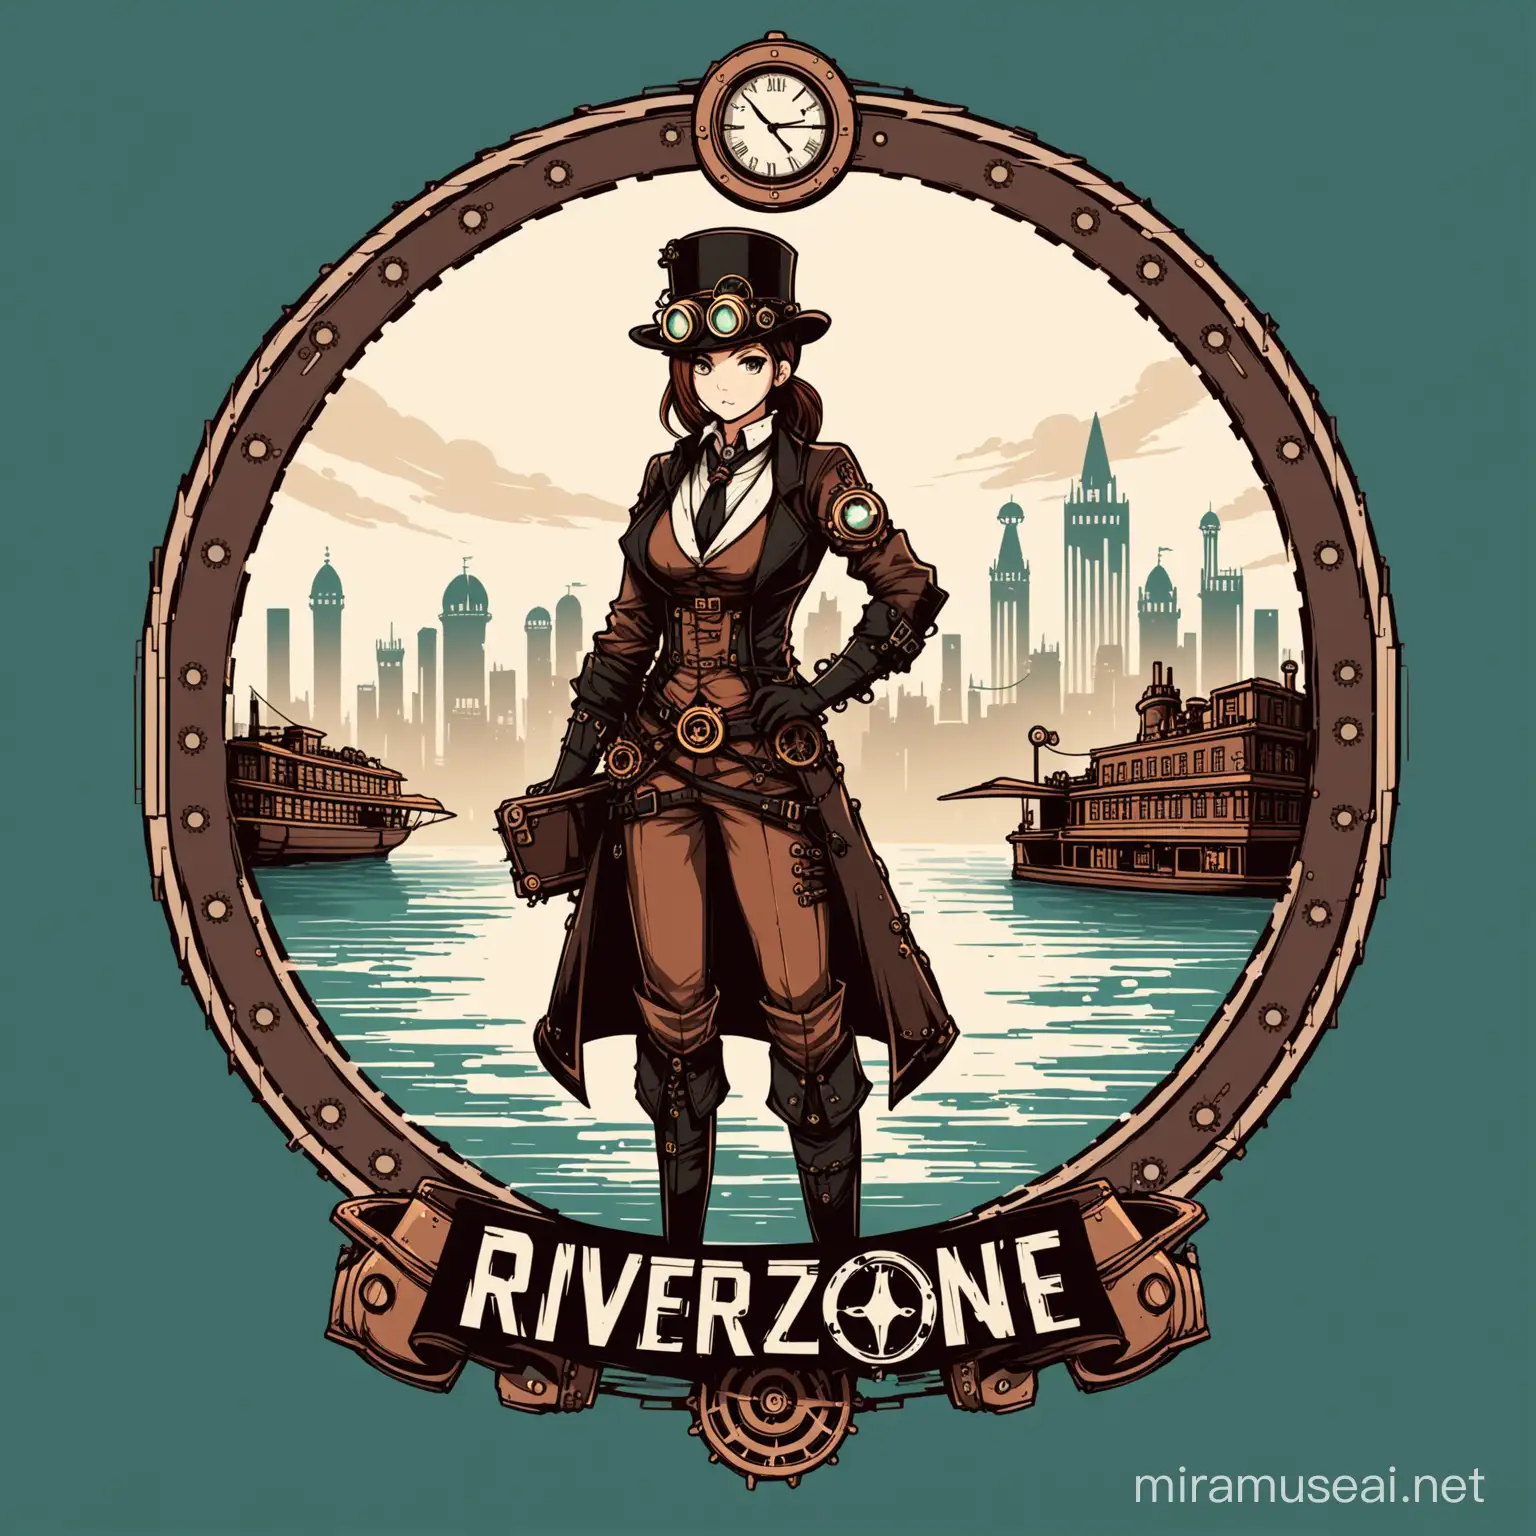 Steampunk City Avatar RiverZone in Minimalist Style